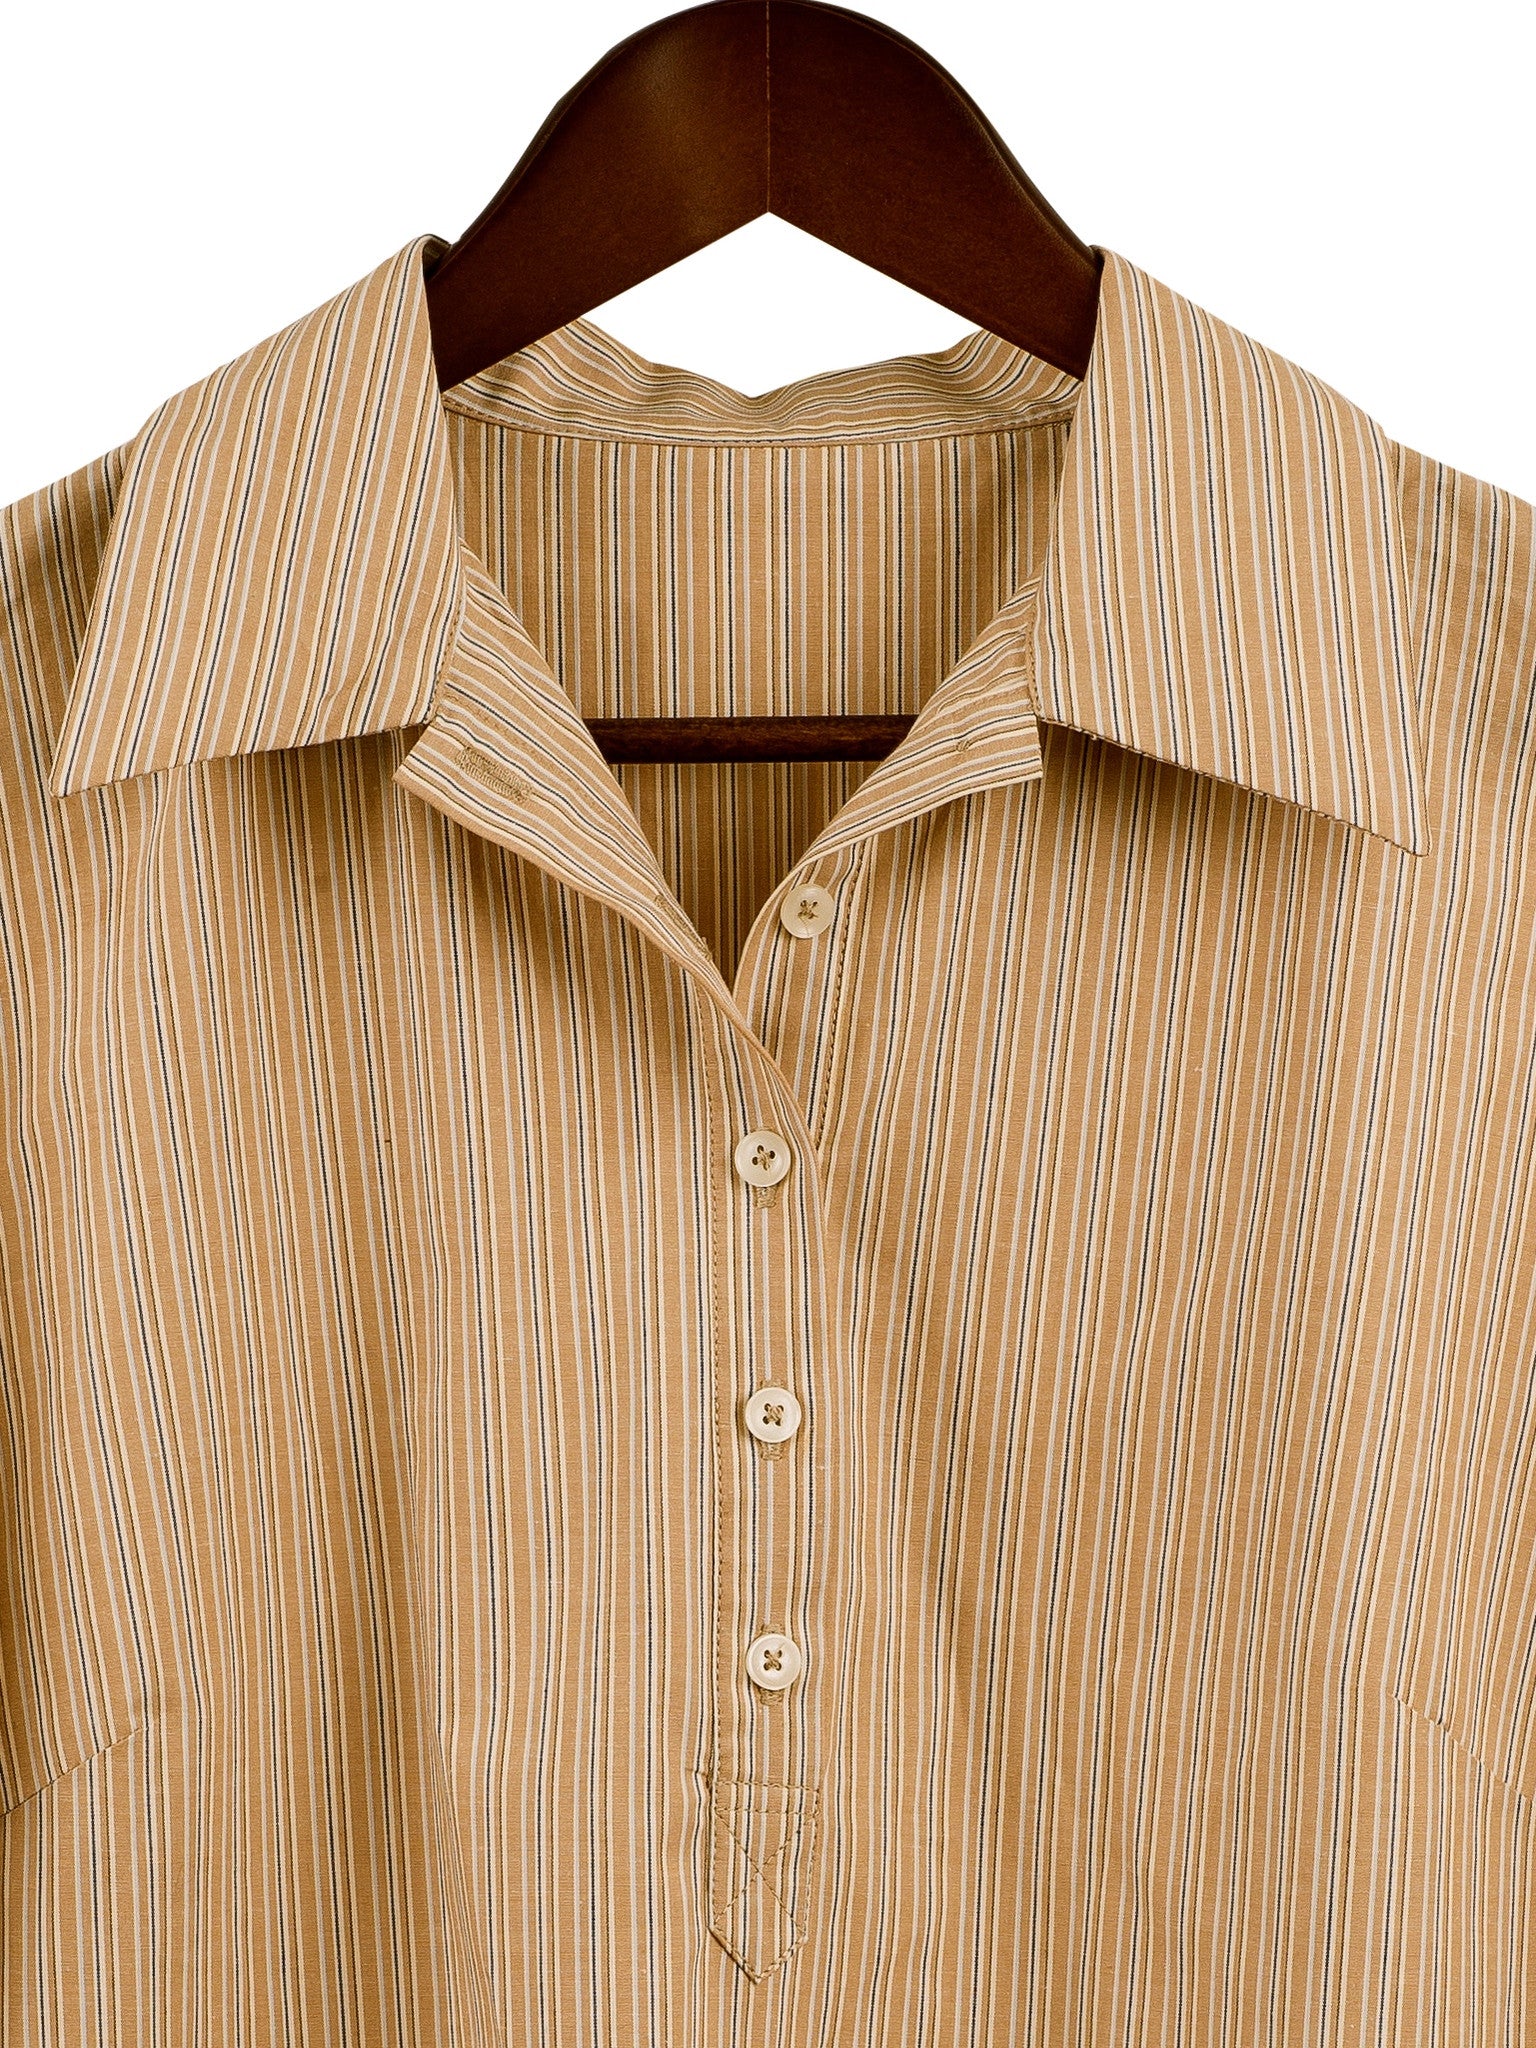 SAFARI SHIRT IN vintage stripe, Shirt, Hickman & Bousfield - Hickman & Bousfield, Safari and Travel Clothing